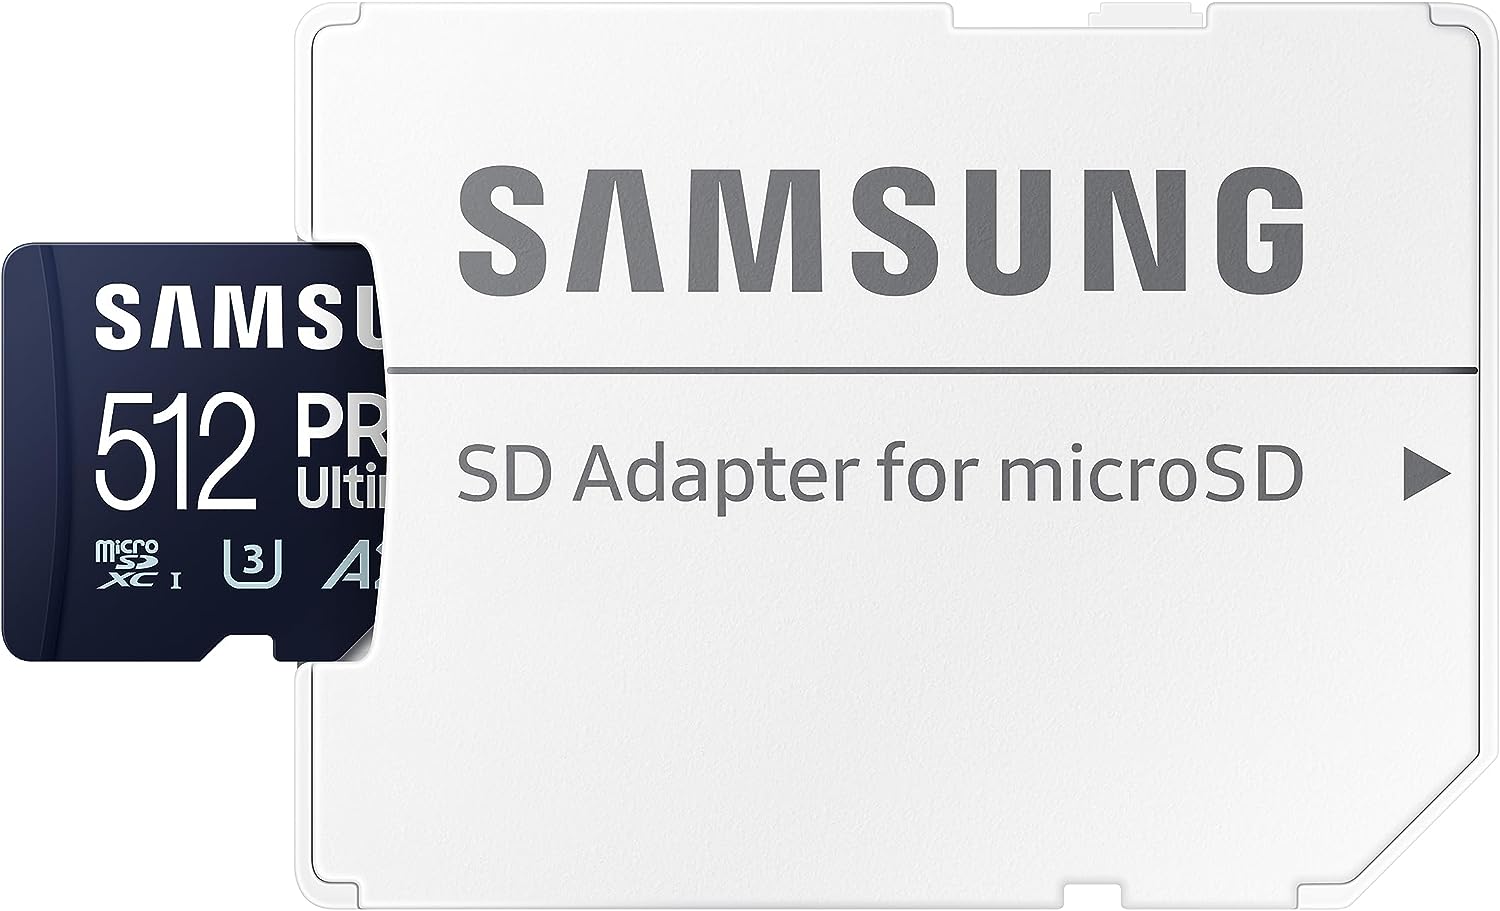 Memoria MicroSDXC Samsung Pro Ultimate 512GB